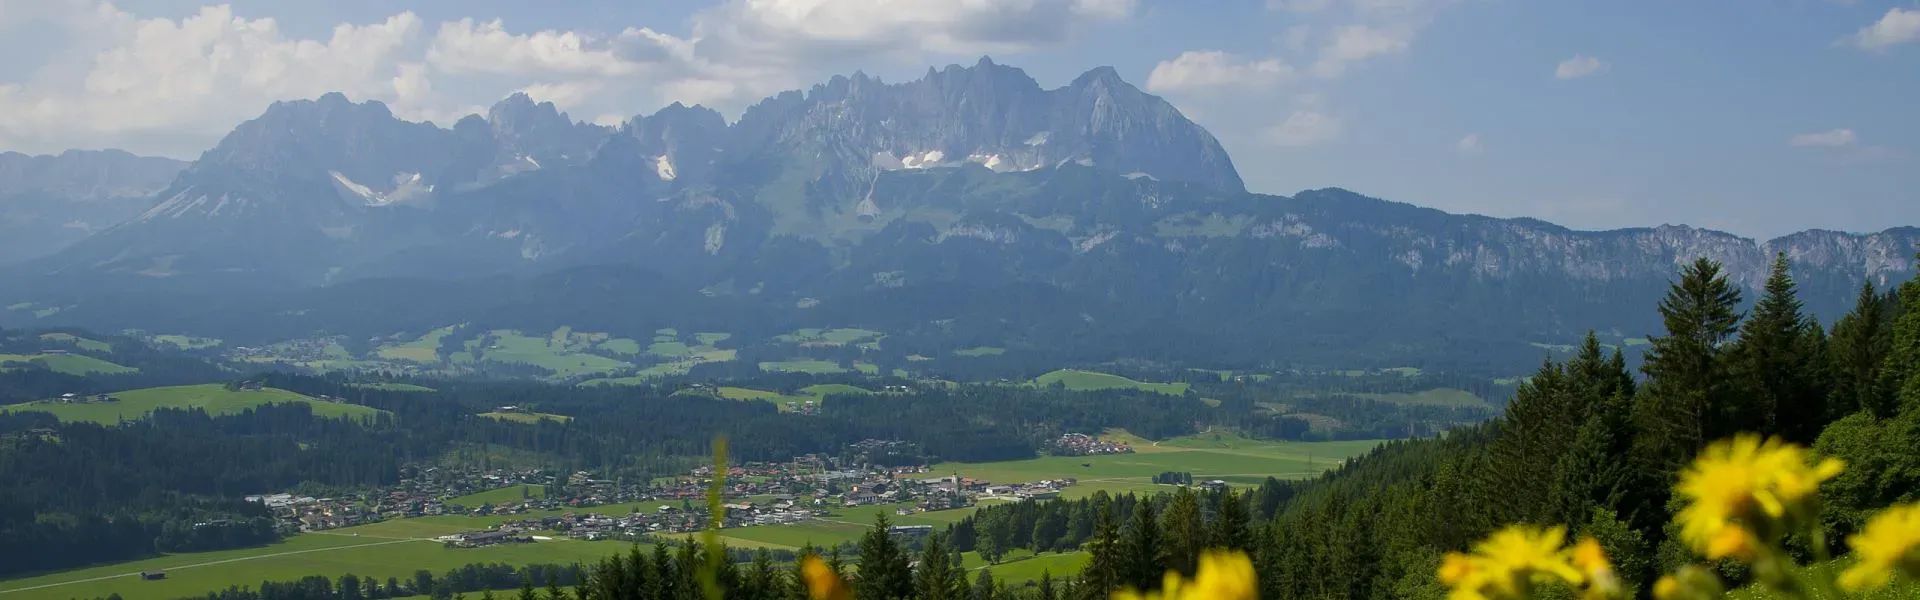 Panorama Oberndorf - Region St. Johann in Tirol